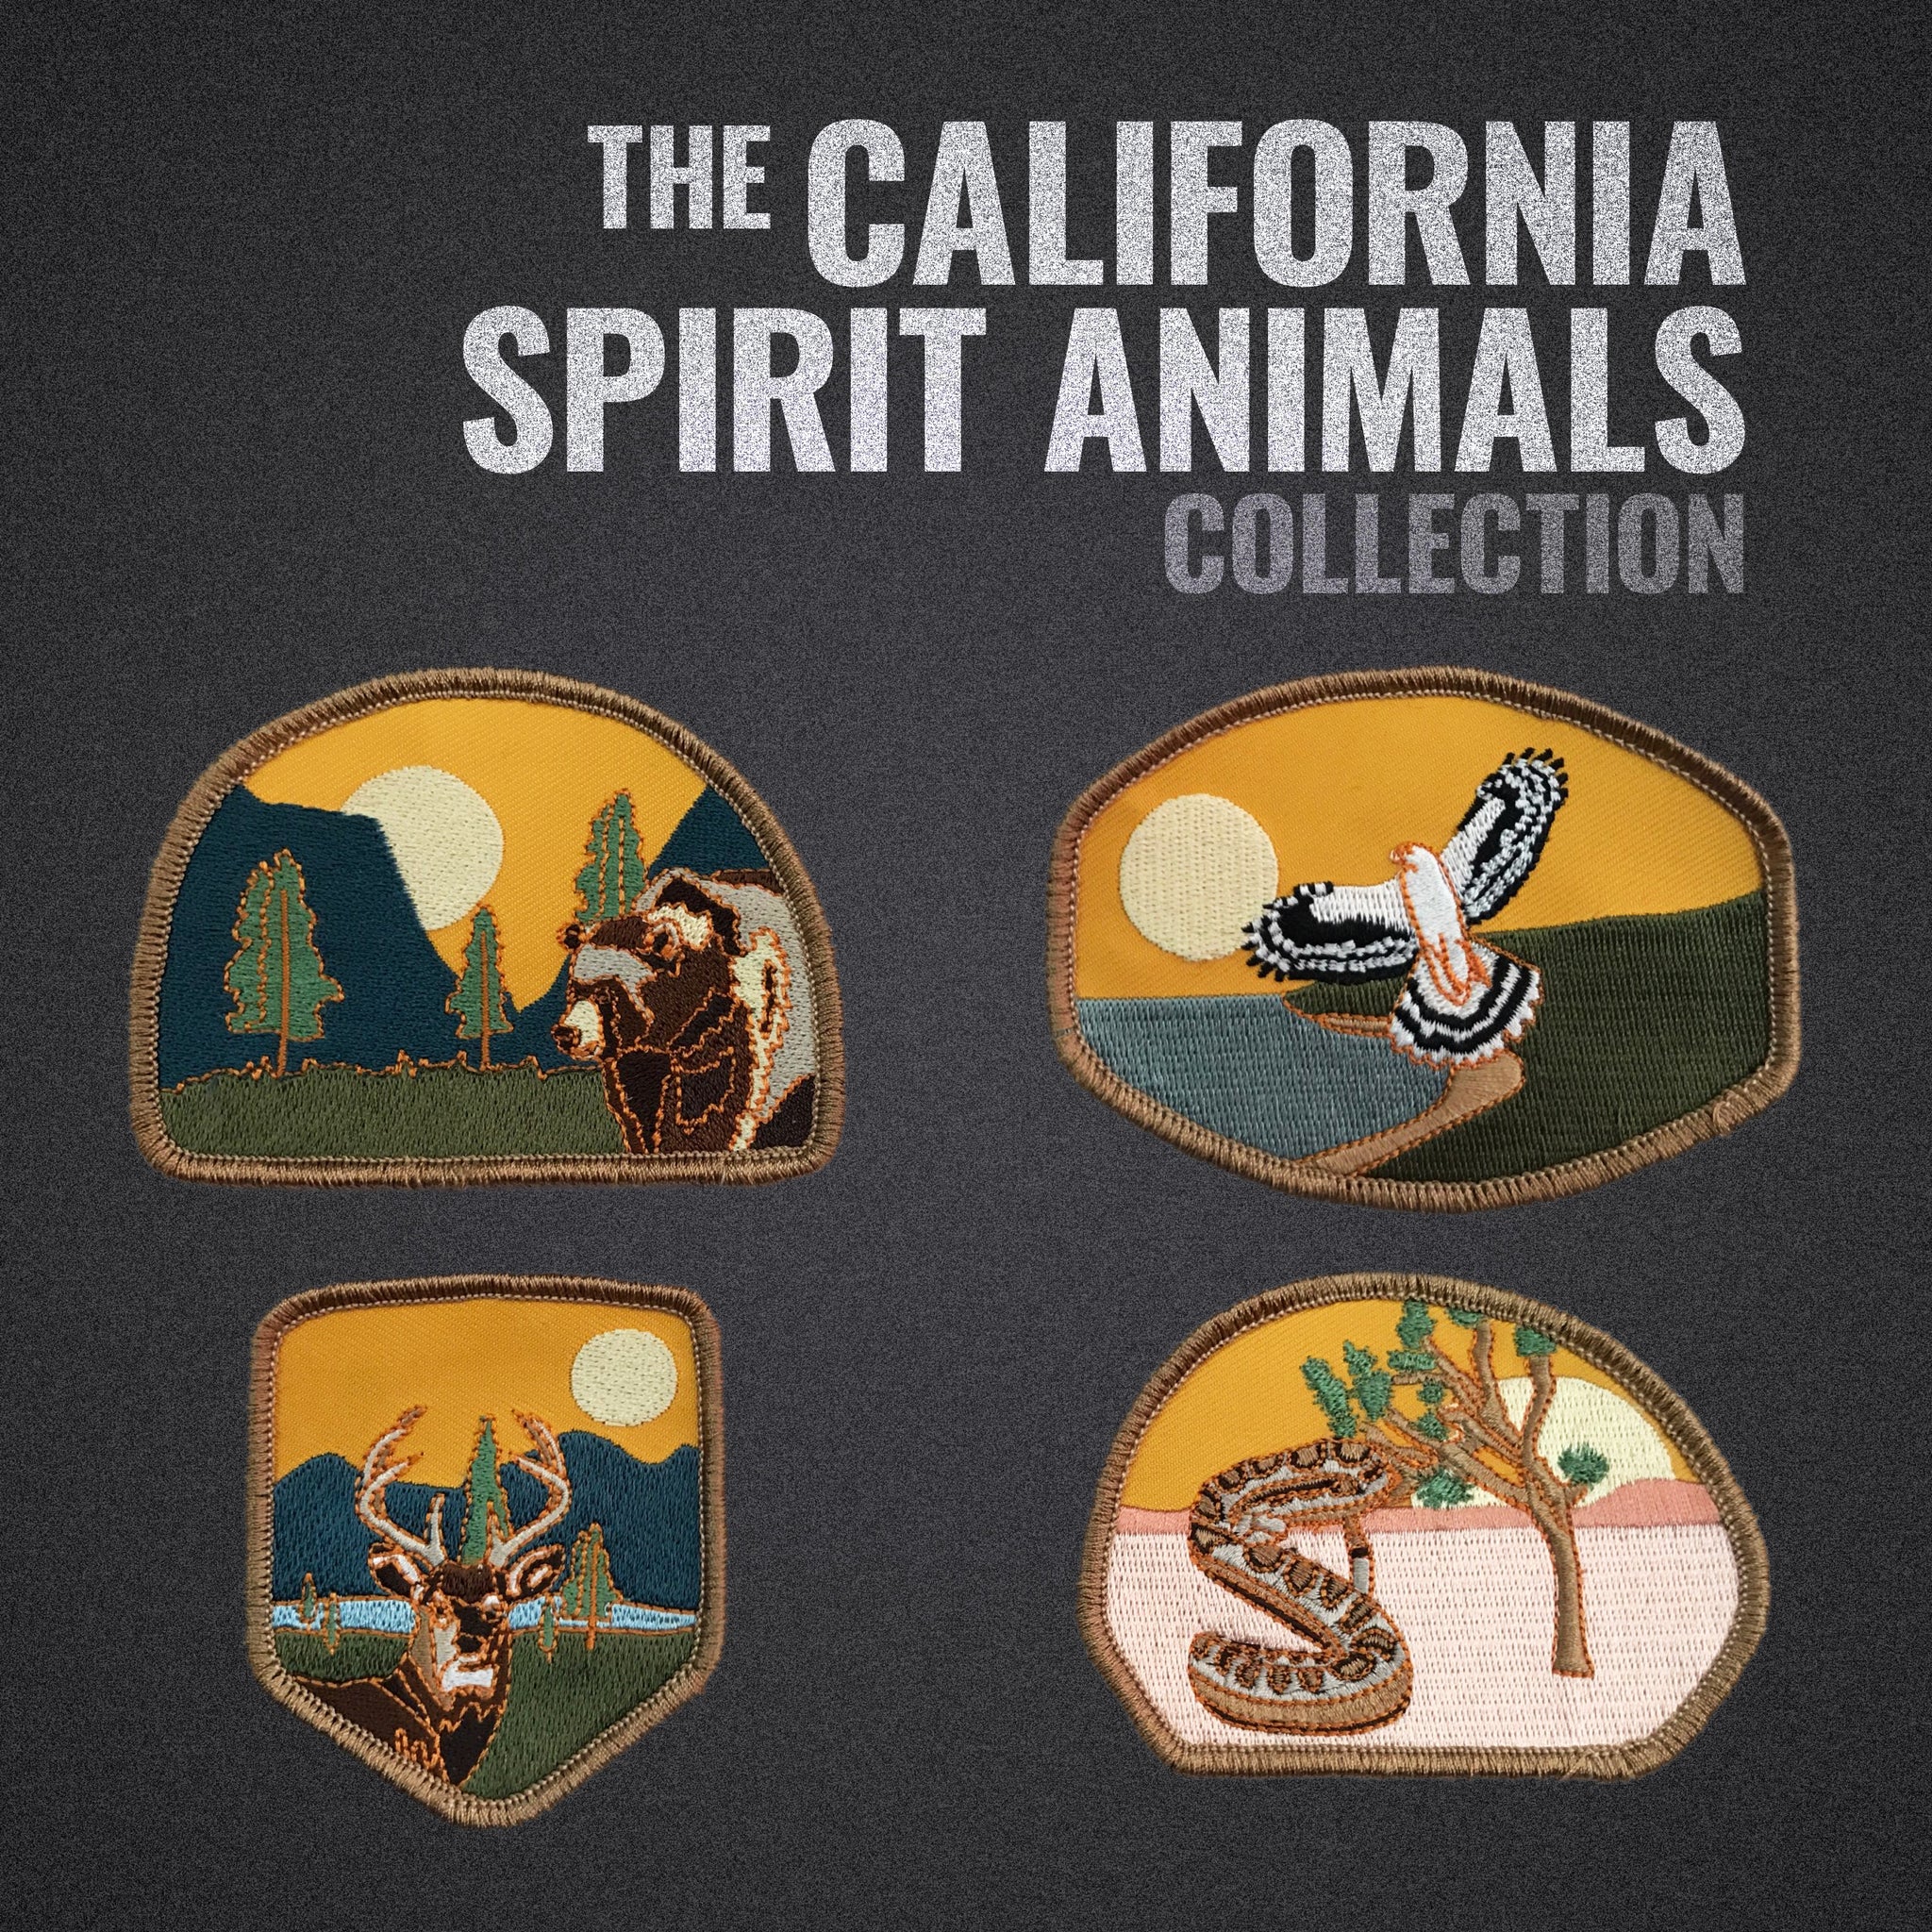 The California Spirit Animals Collection